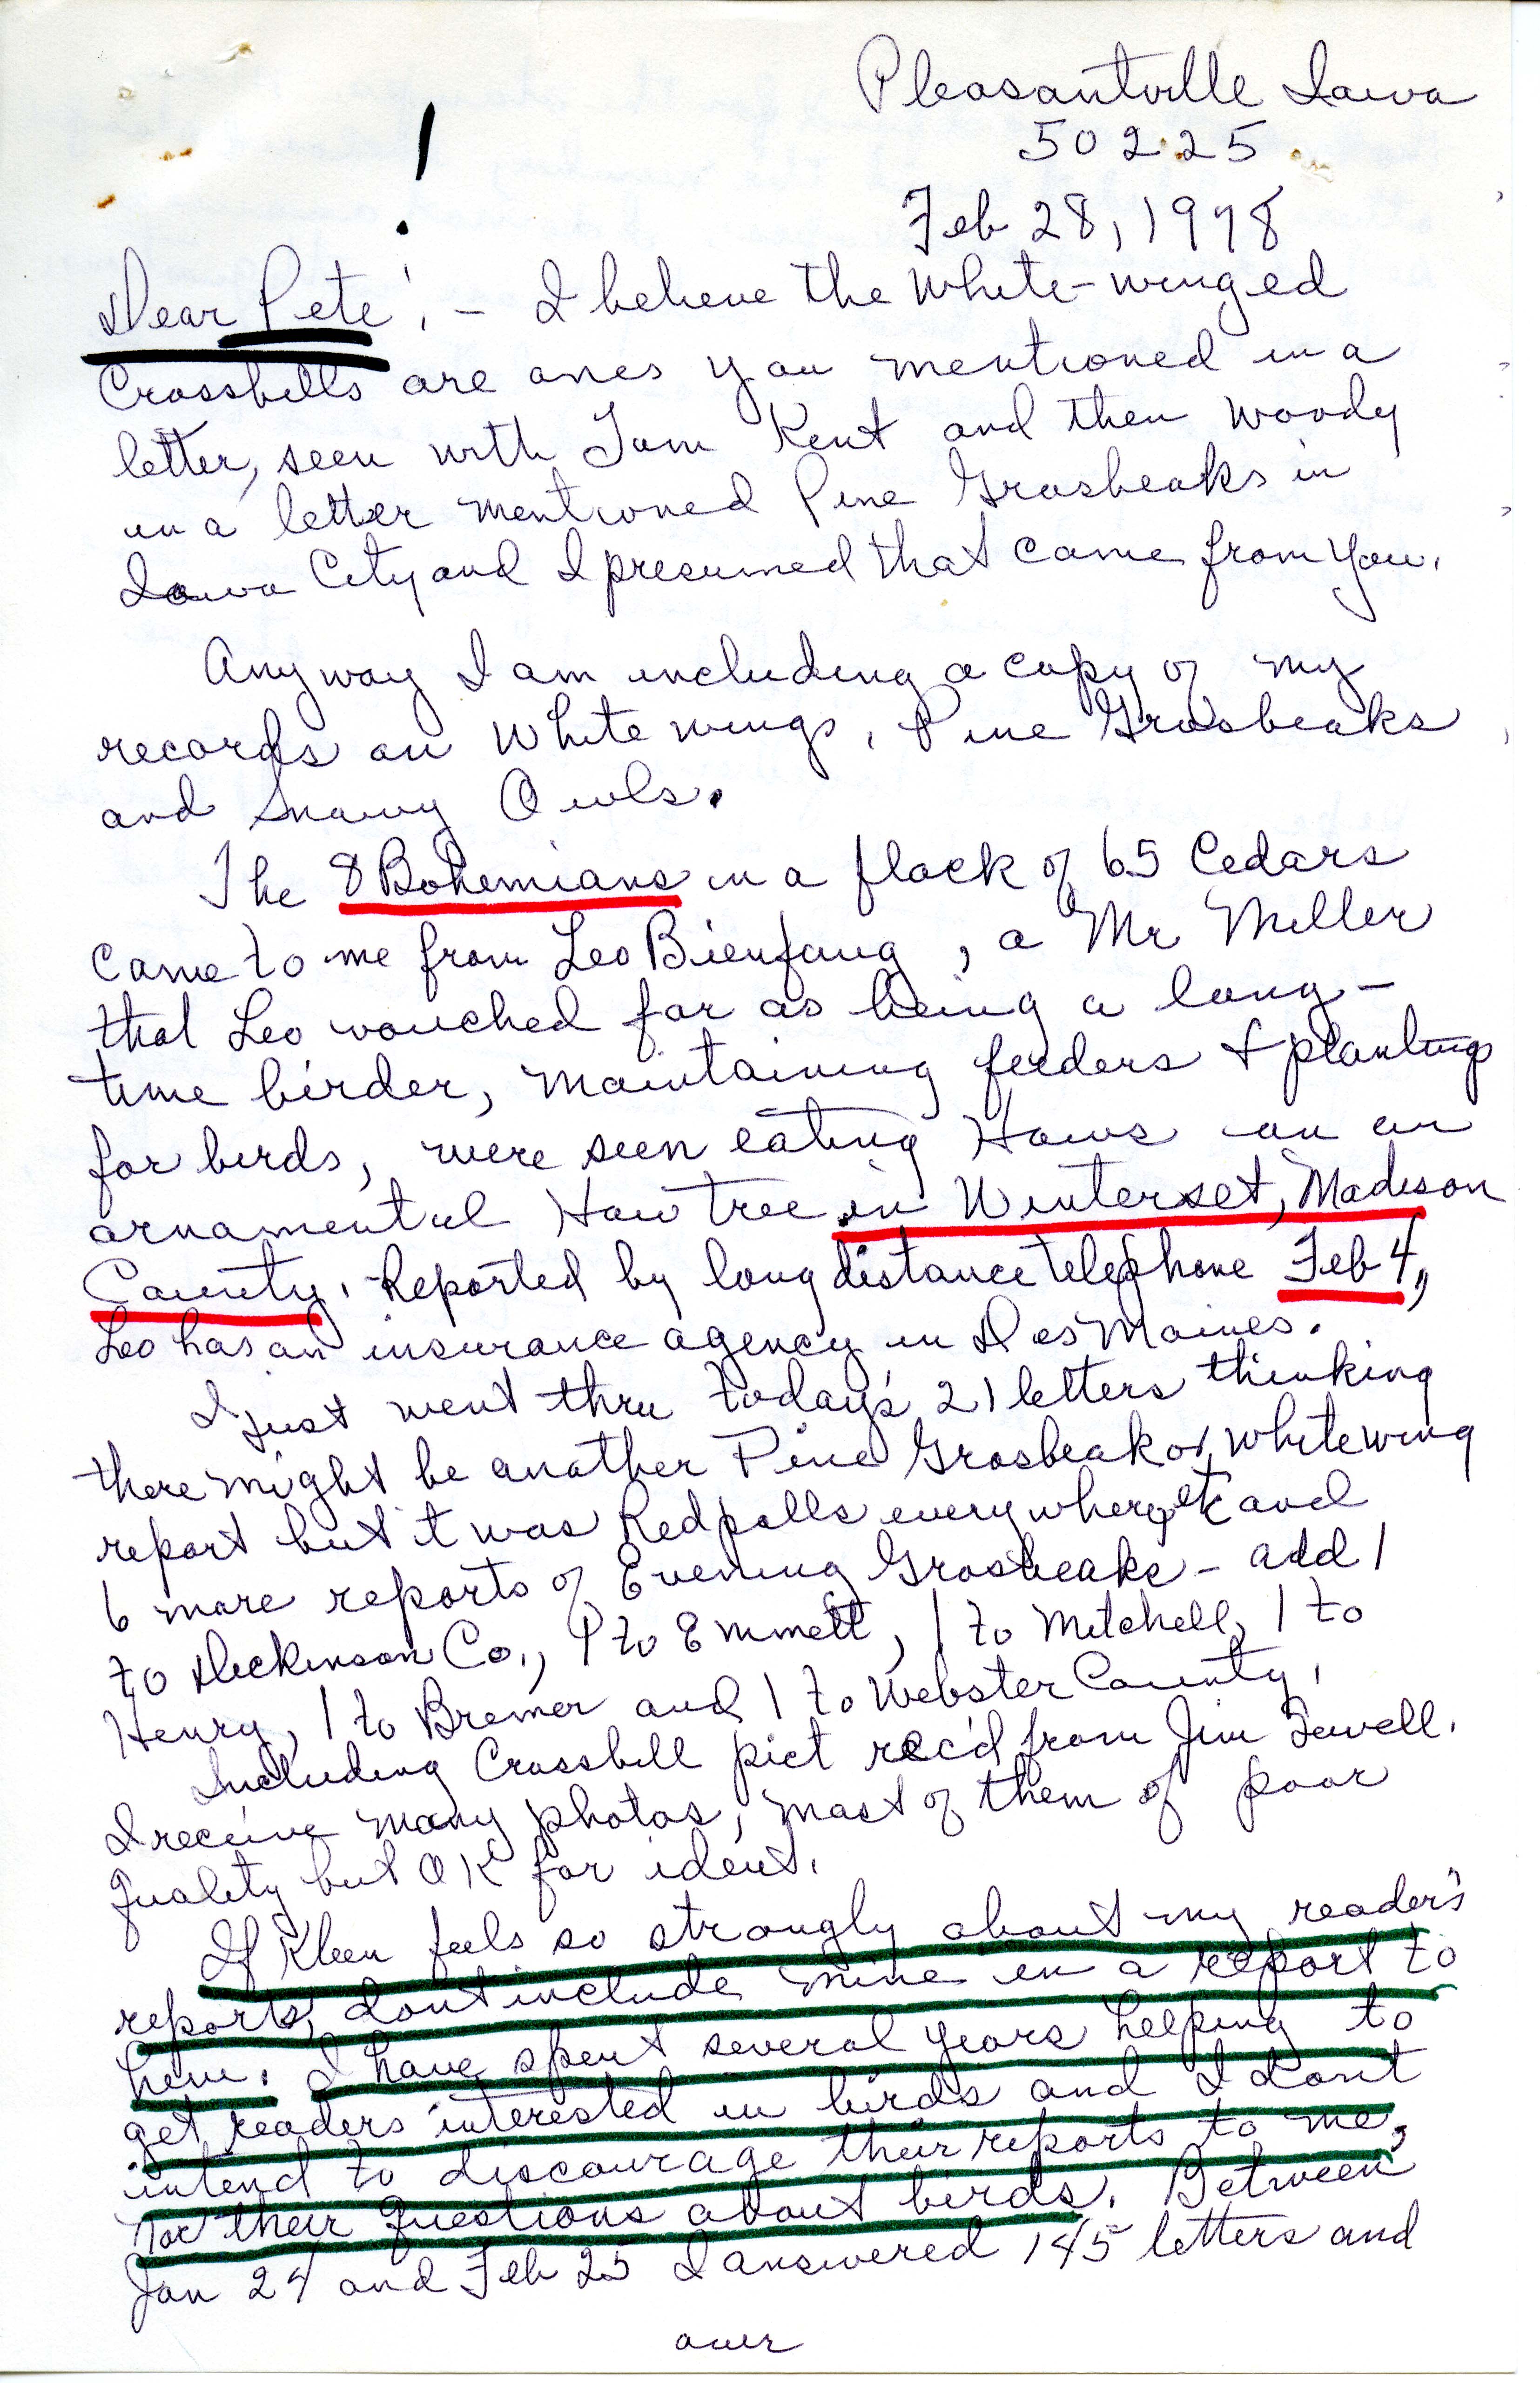 Gladys Black letter to Peter C. Petersen regarding bird sightings, February 28, 1978